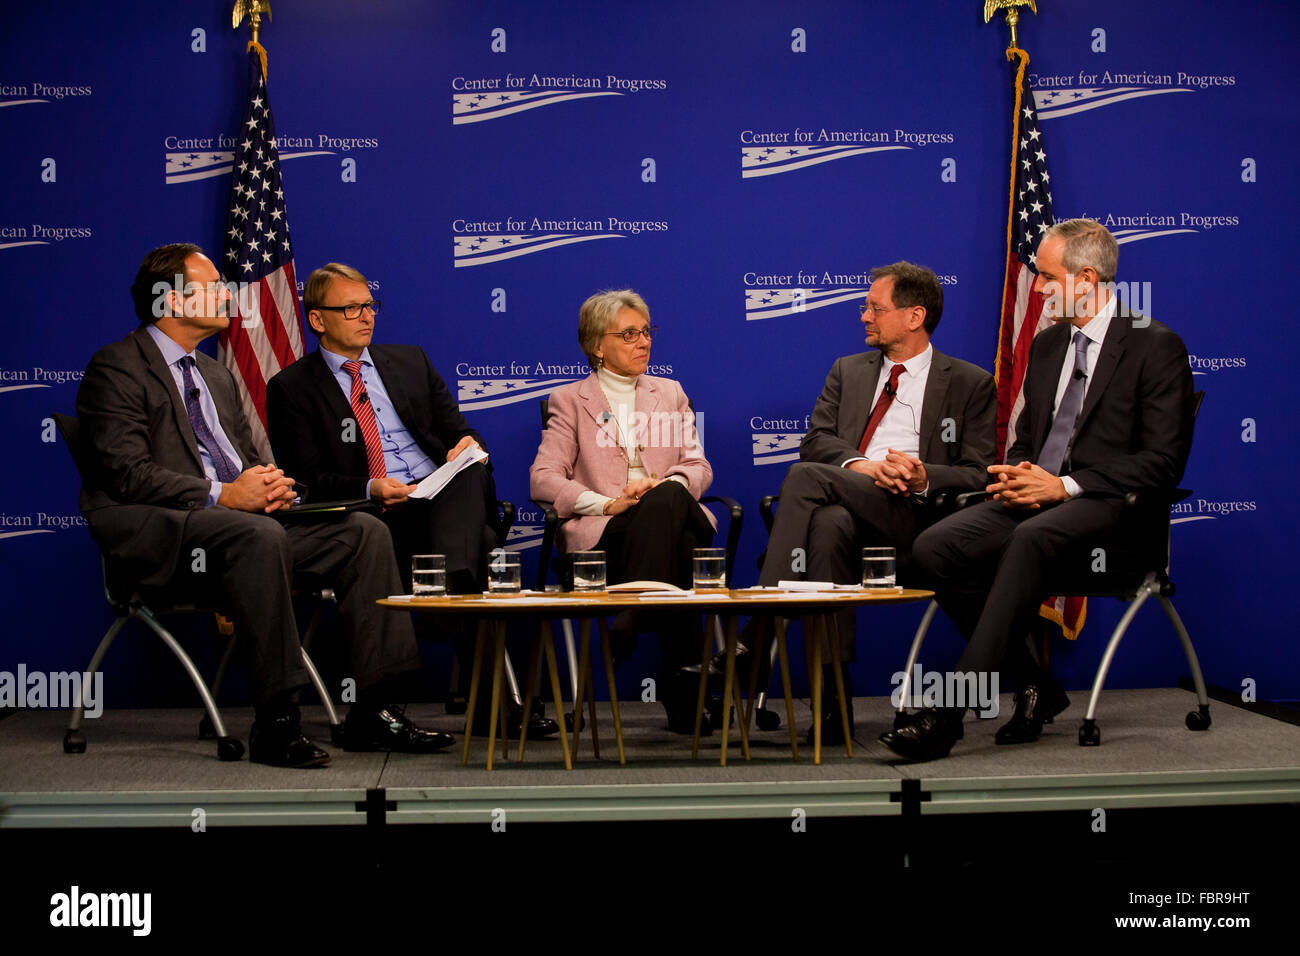 Speaker panel at the Center for American Progress - Washington, DC USA Stock Photo